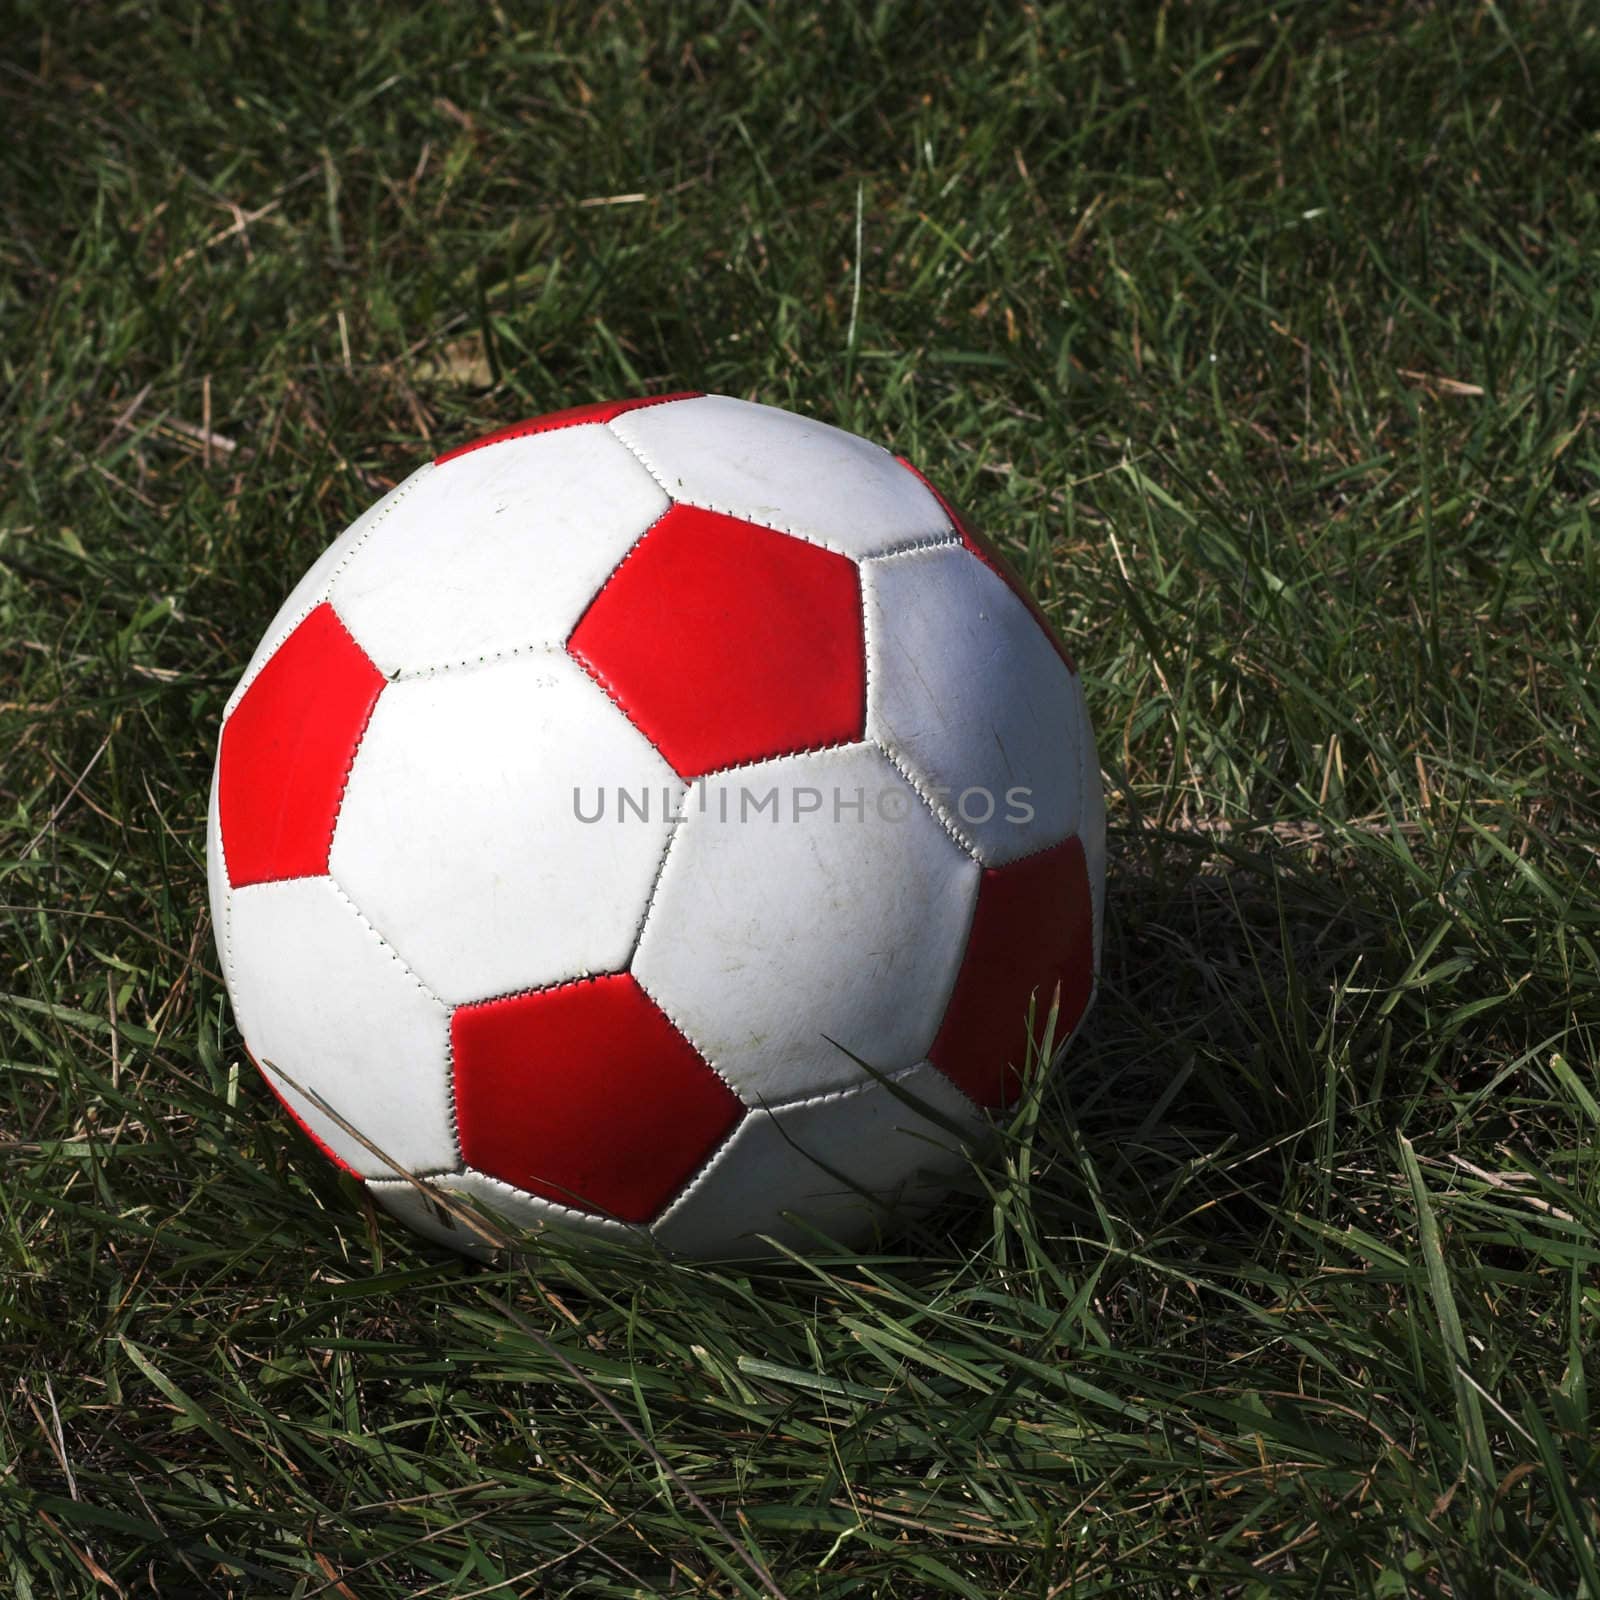  Soccer ball by alexkosev